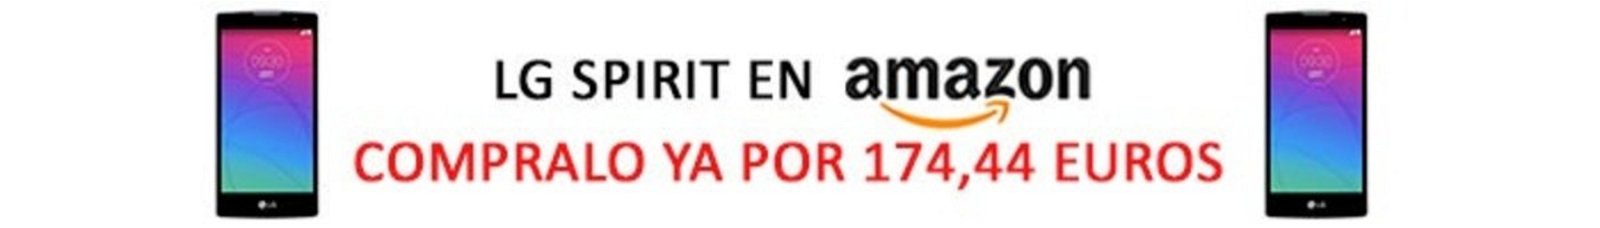 LG Spirit oferta Amazon